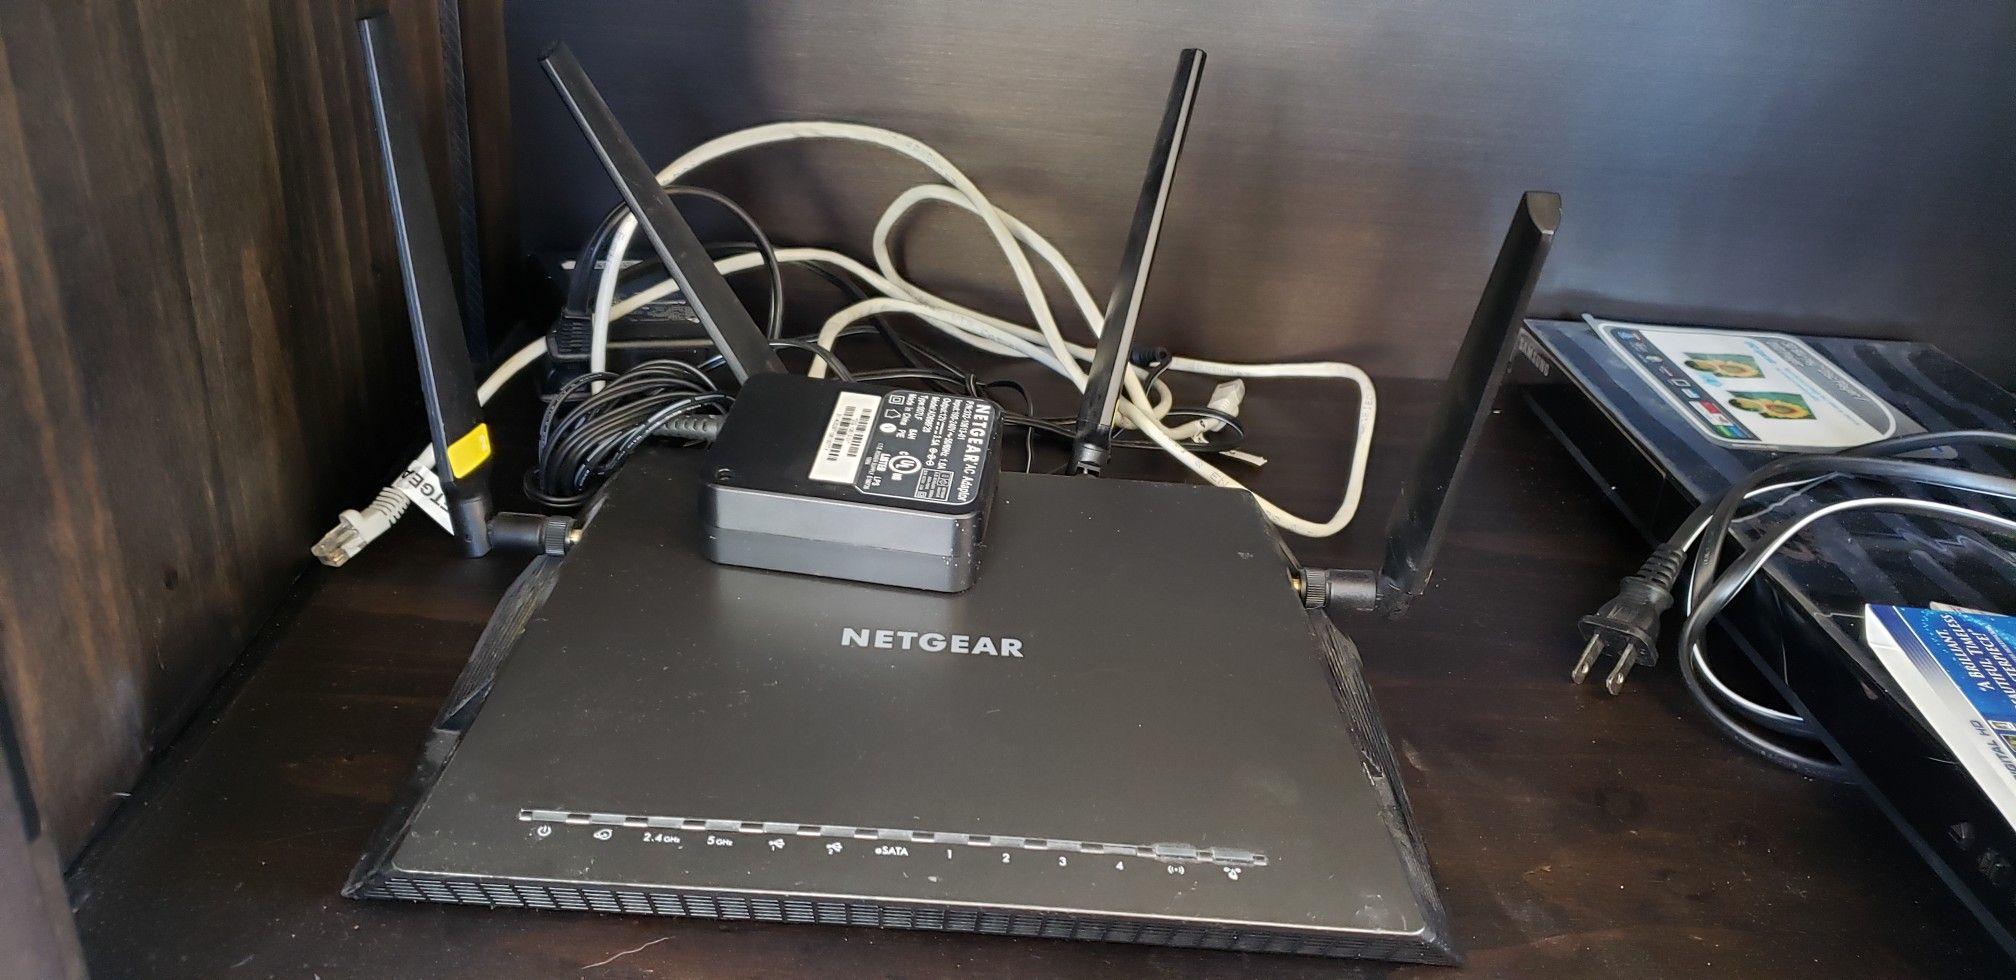 NetGear Nighthawk X4 Wireless Router